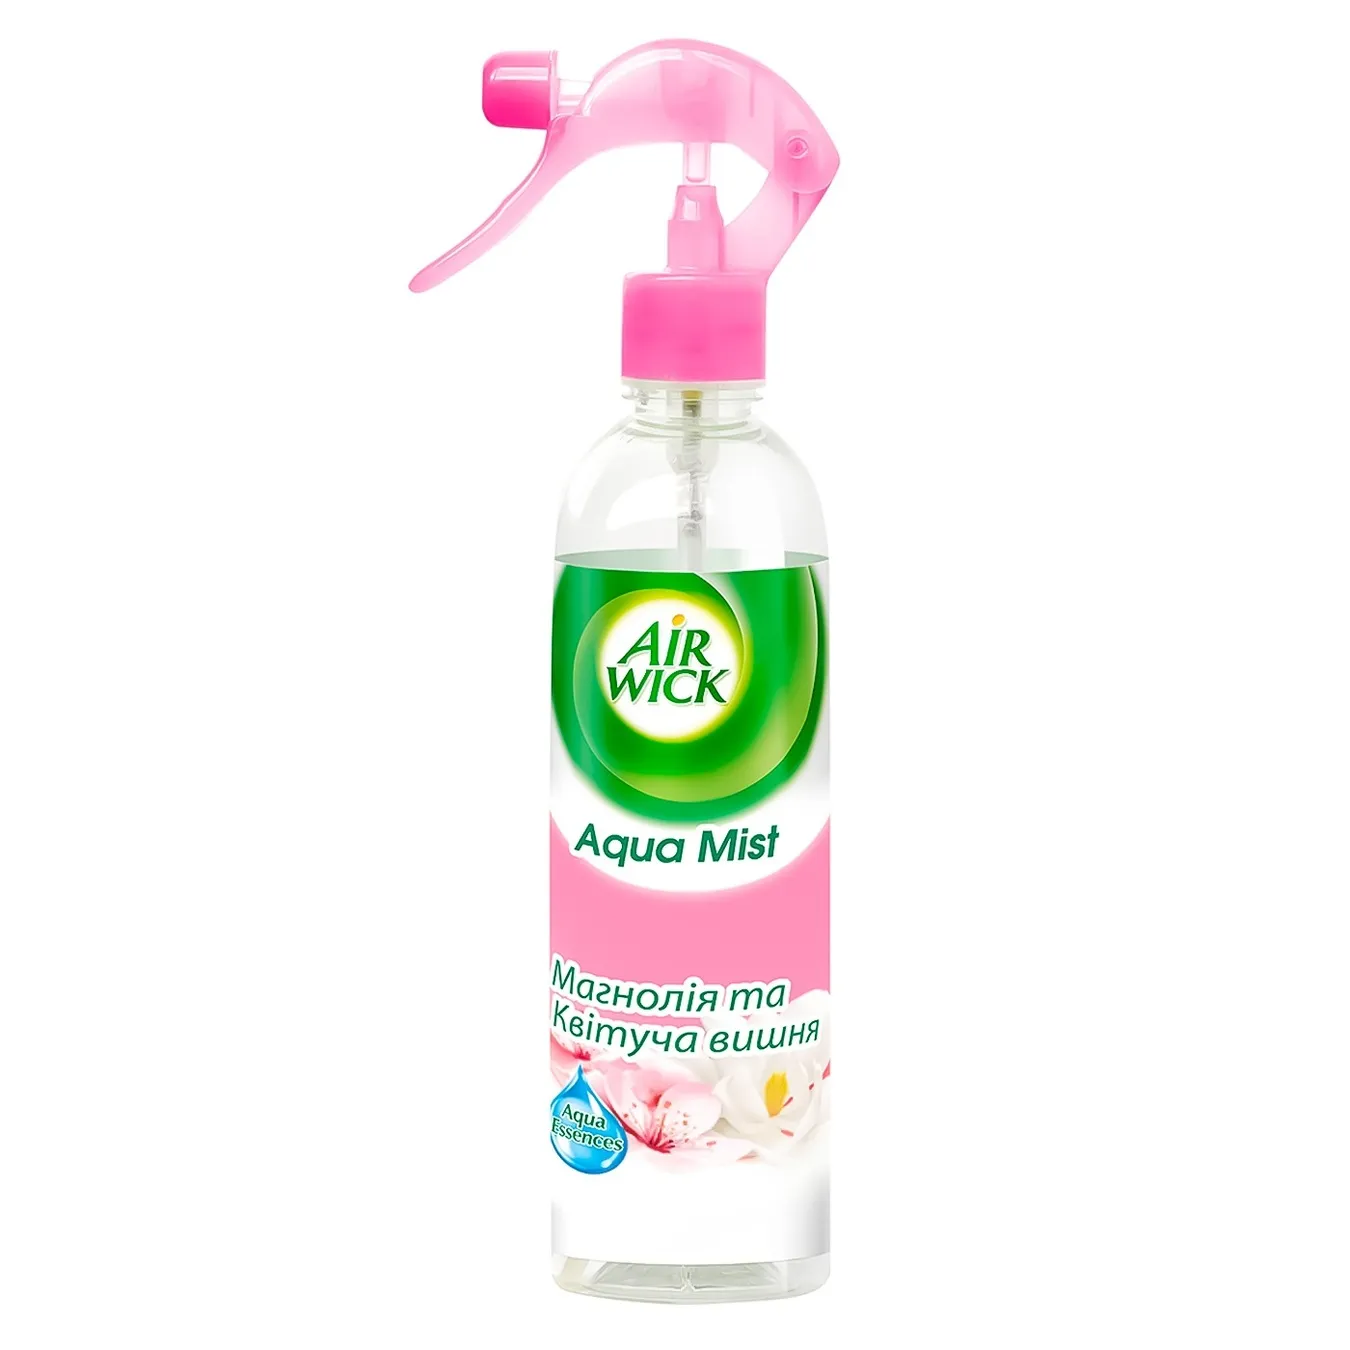 AirWick Aqua Mist Fresh dew Magnolia and cherry blossom Air freshener spray 345ml